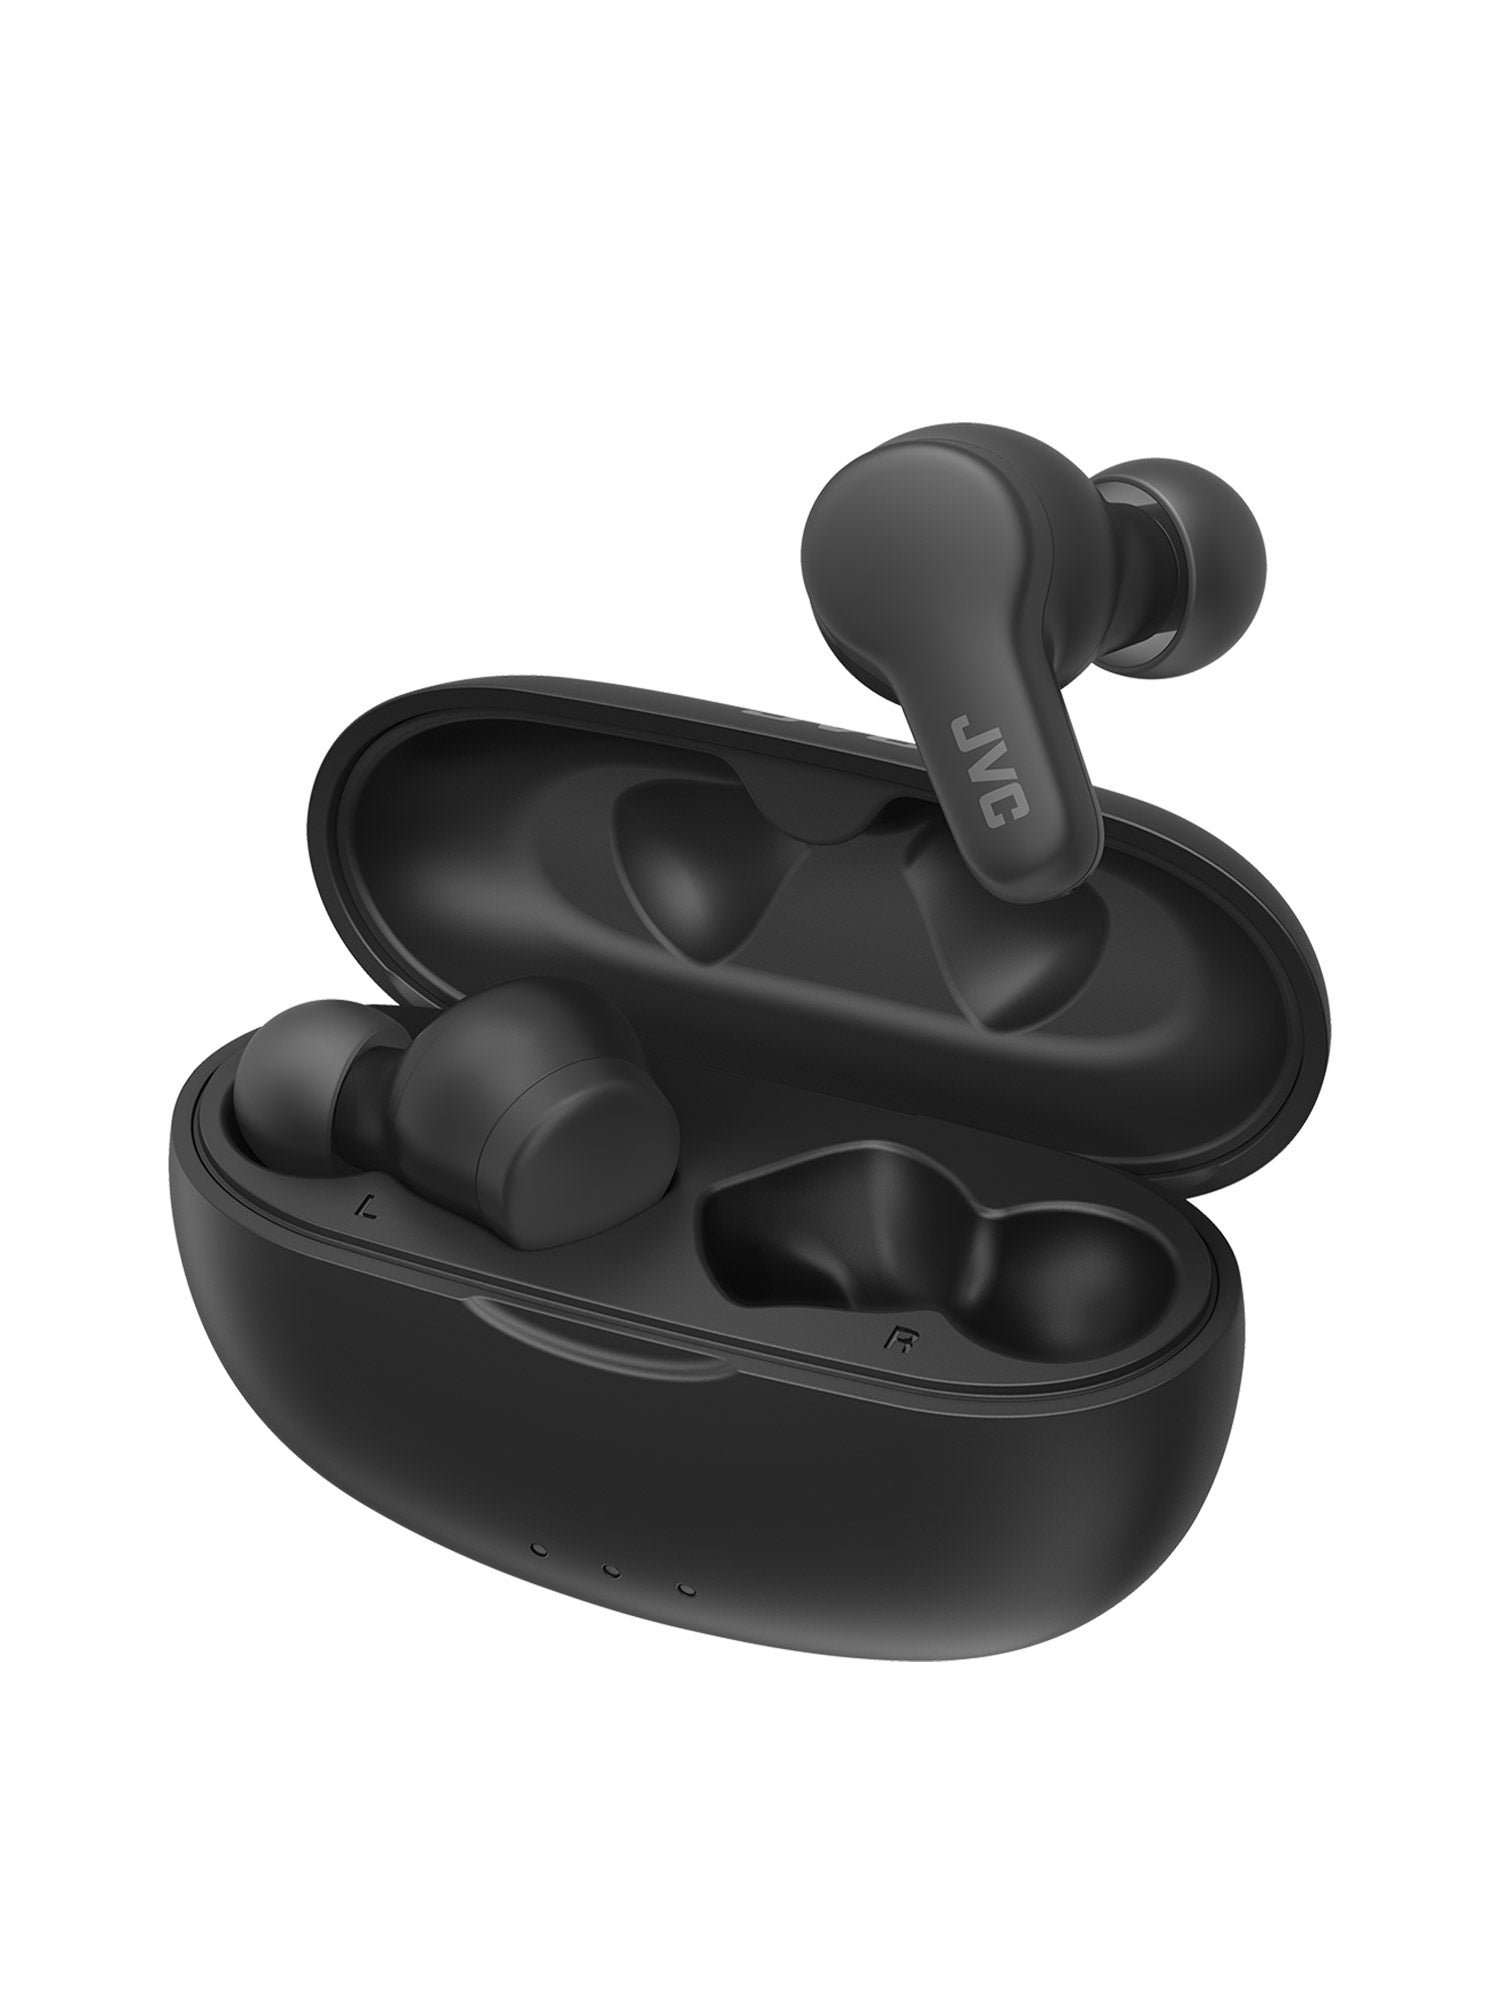 HA-A7T2 in black earbuds wireless charging case by JVC